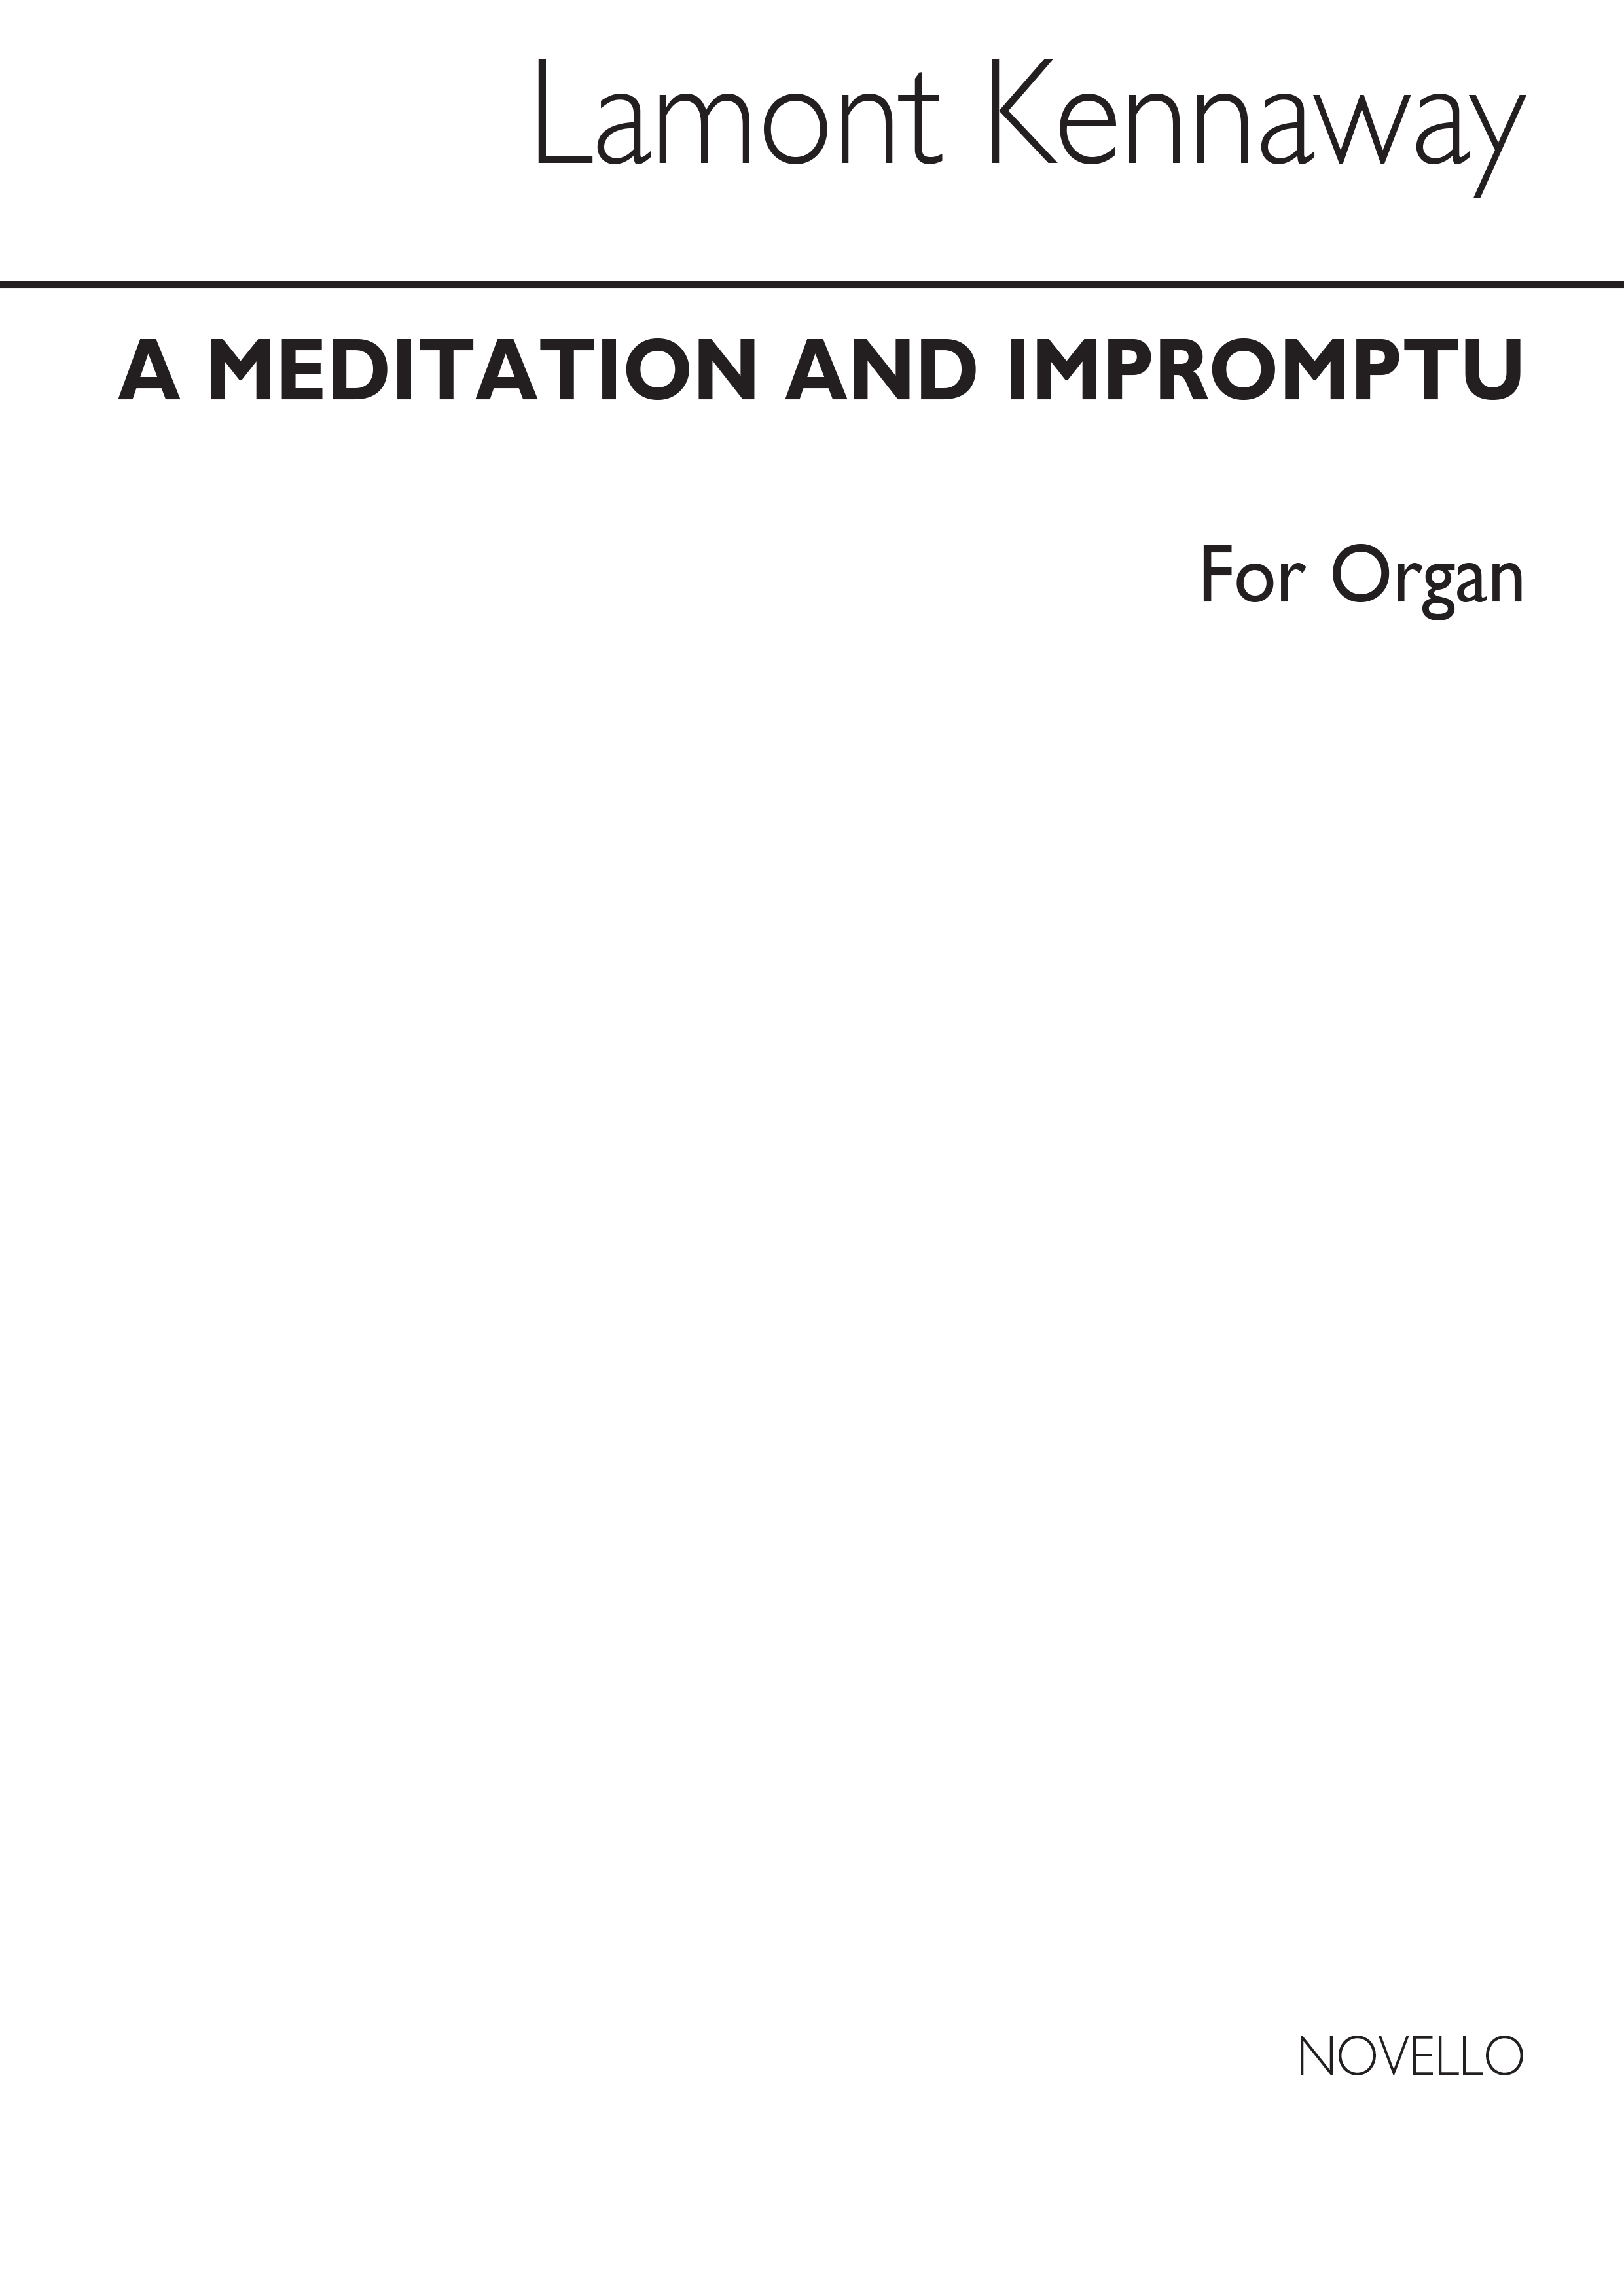 Lamont Kennaway: Meditation and Impromptu For Organ